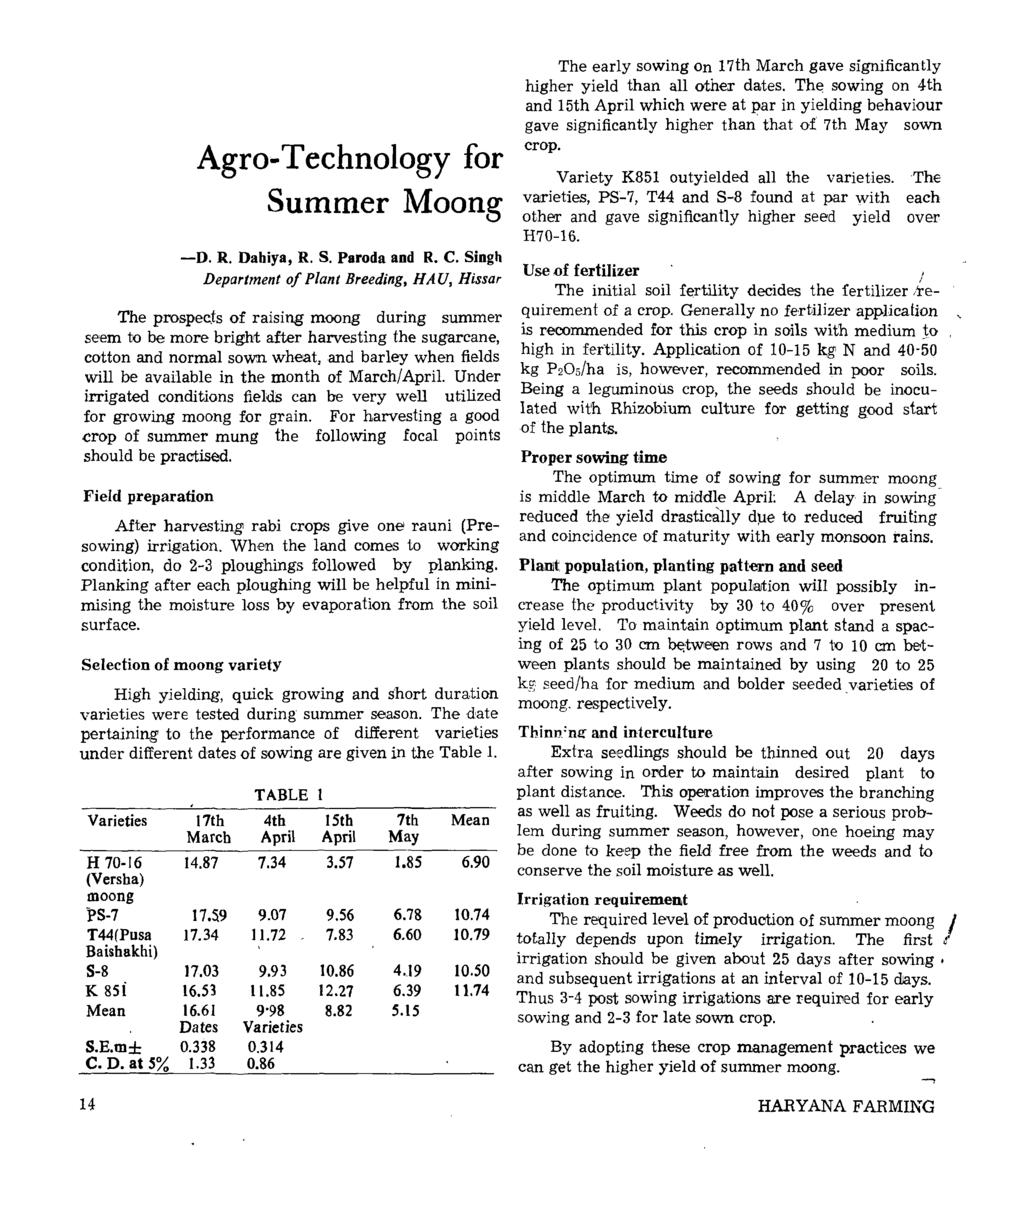 Agro-Technology for Summer Moong -D. R. Oabiya, R. S. Paroda and R. C.